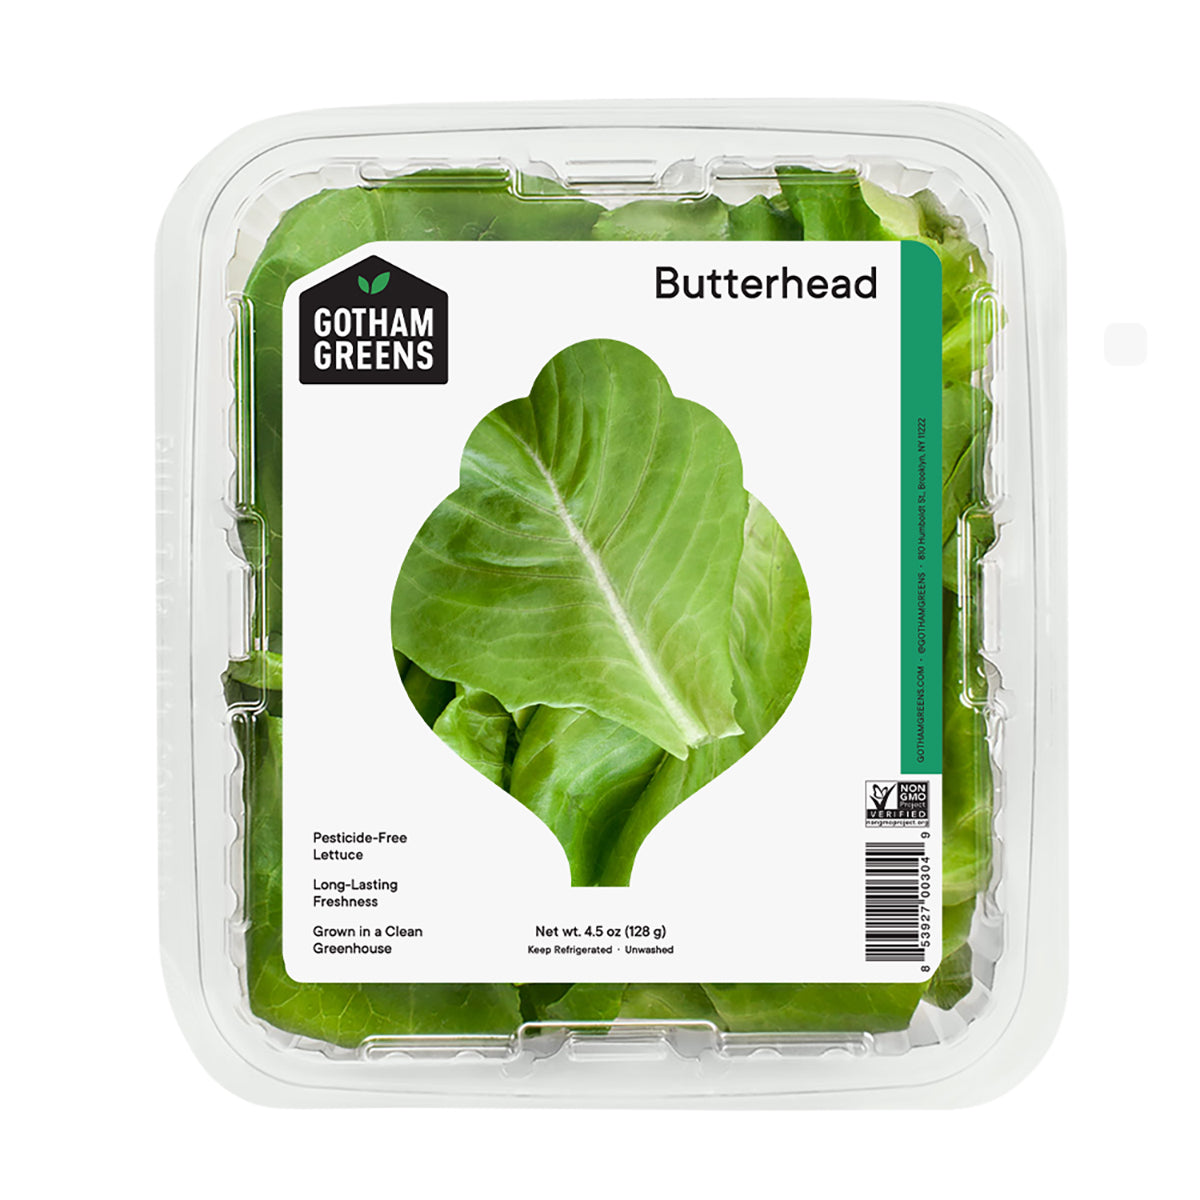 Gotham Greens Butterhead Lettuce 4.5 OZ